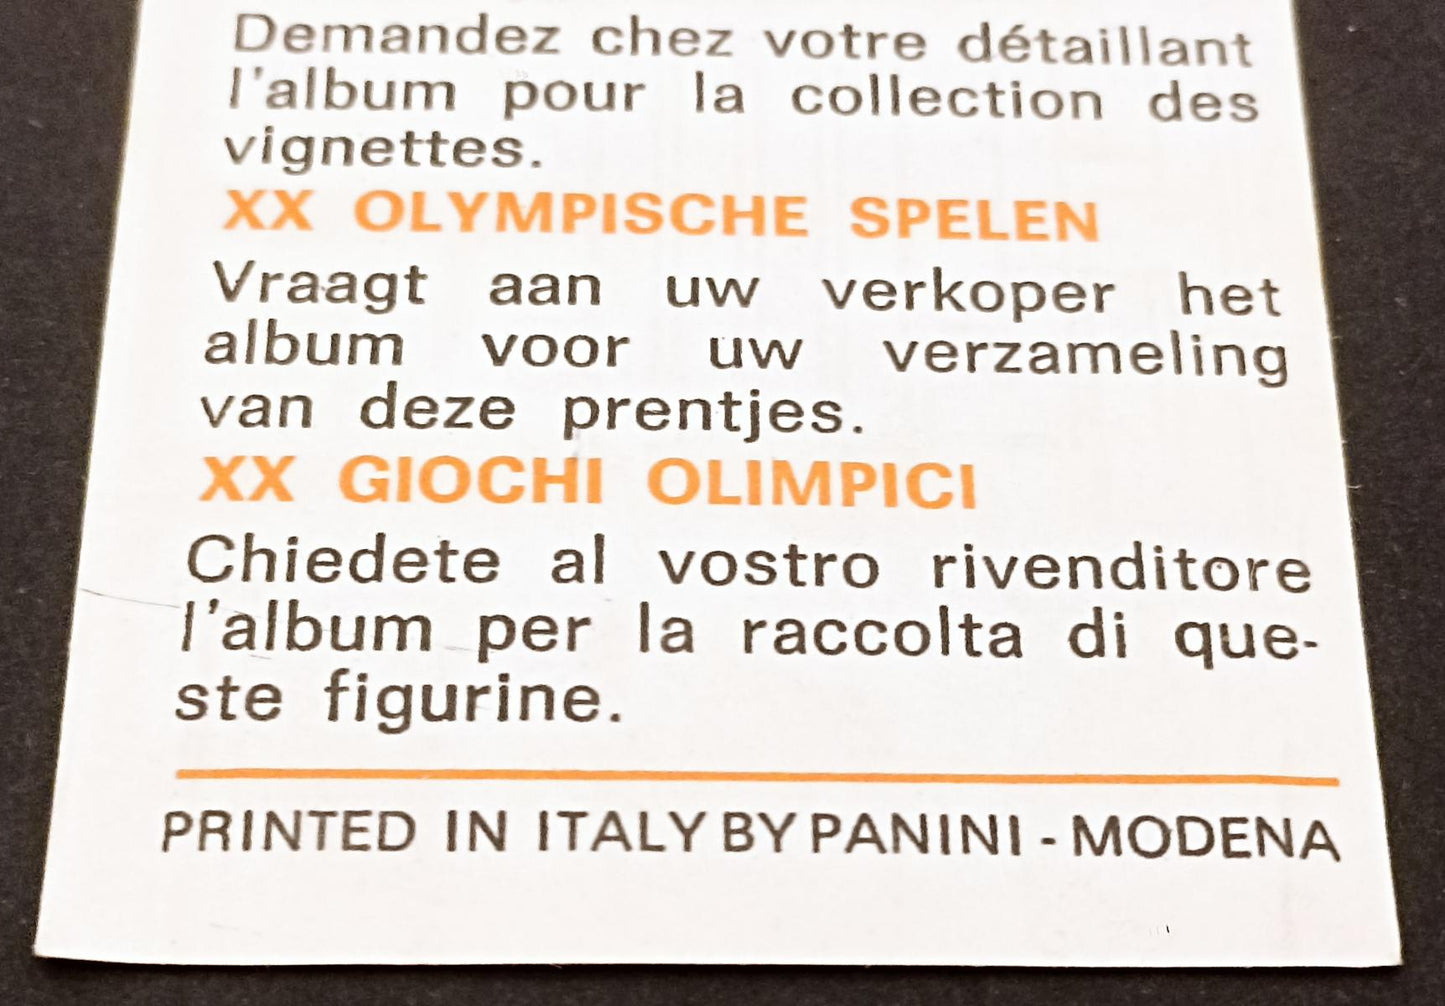 CYCLING CARD - PANINI - MUNCHEN 1972 - FRANCESCO MOSER ROOKIE - #260 - MINT